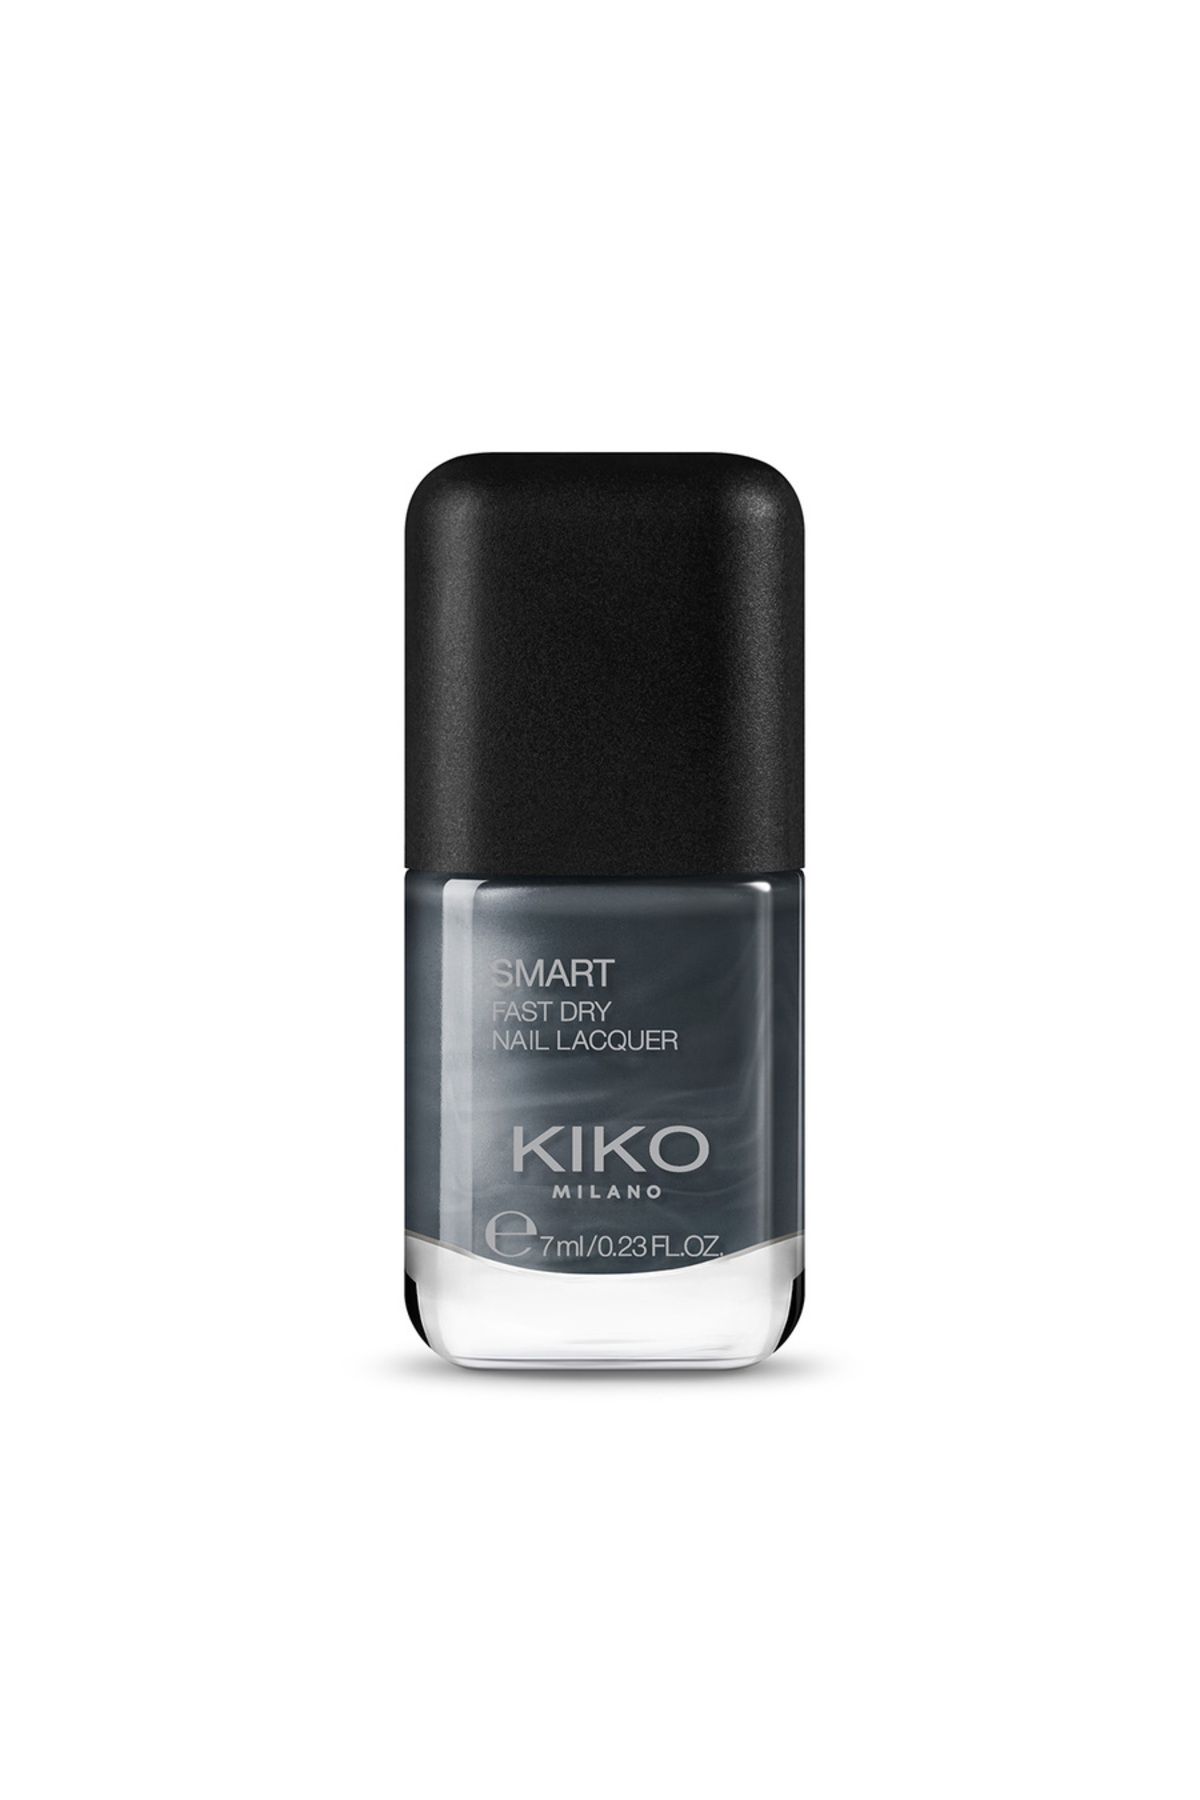 KIKO Oje - Smart Nail Lacquer 96 Pearly Anthracite